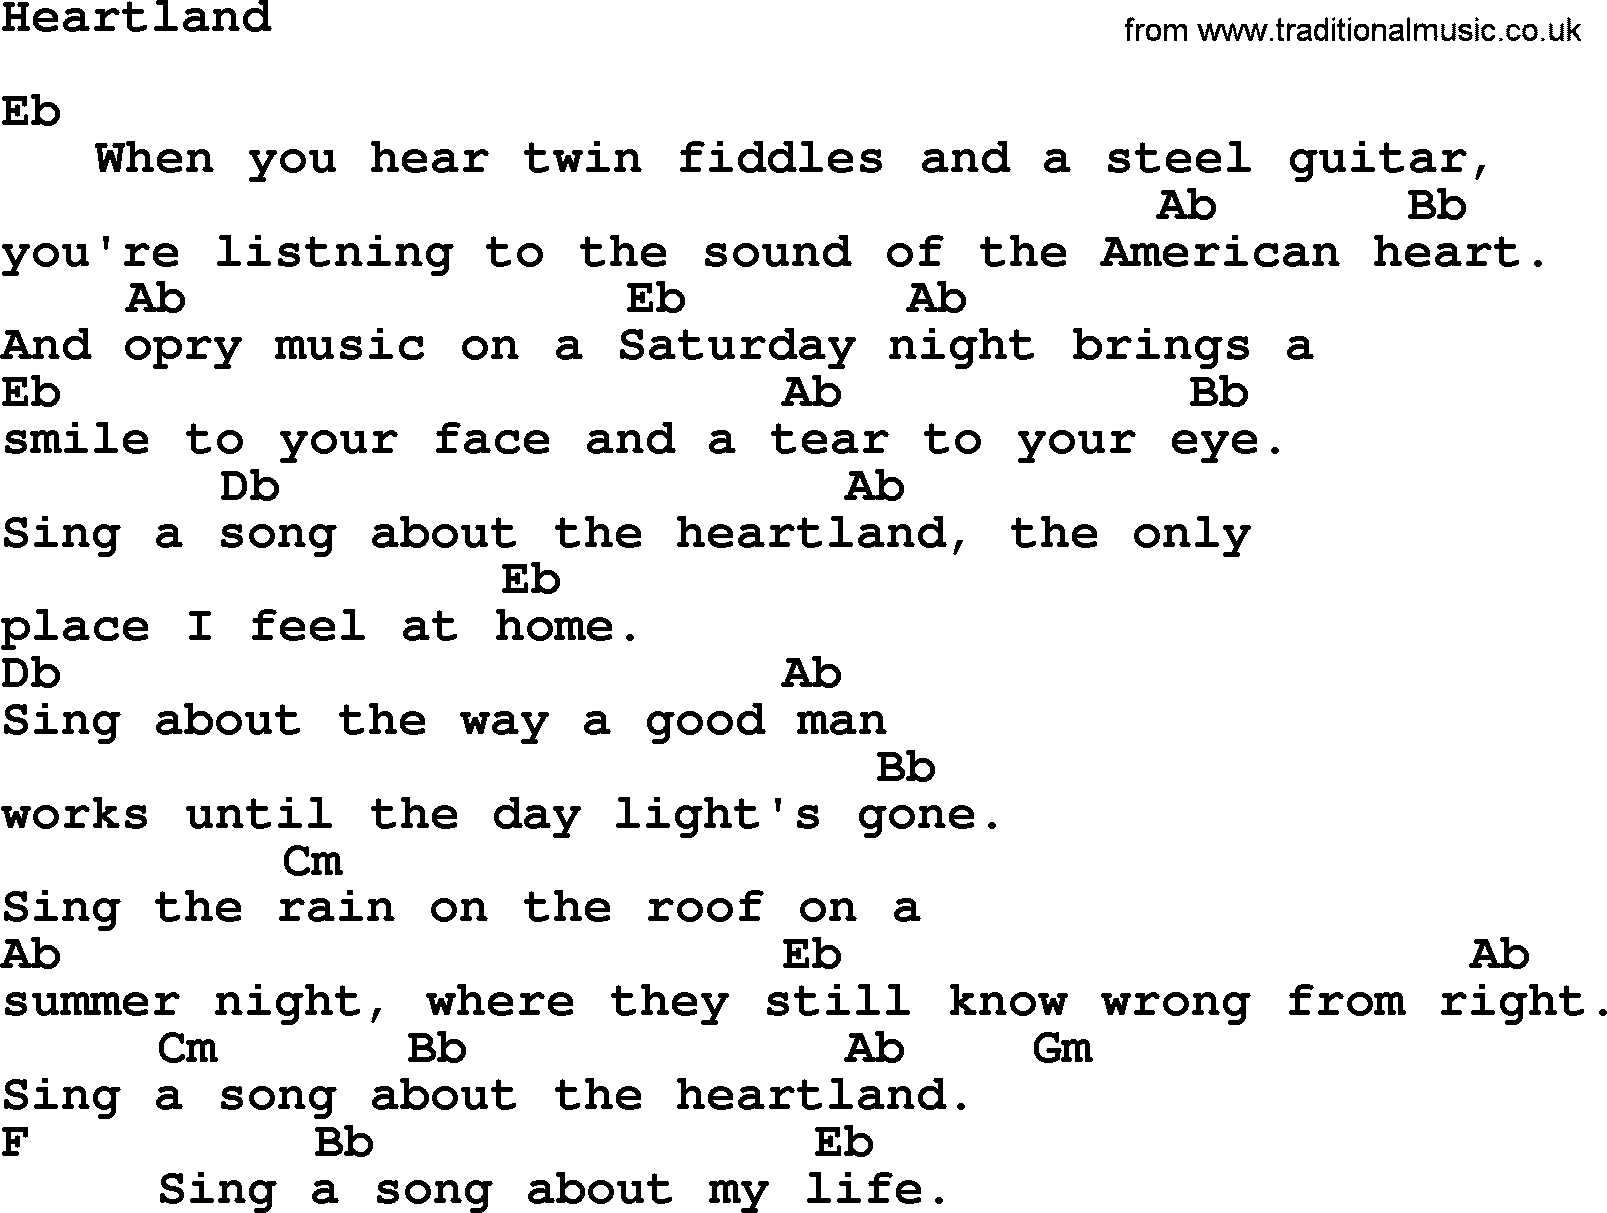 George Strait song: Heartland, lyrics and chords